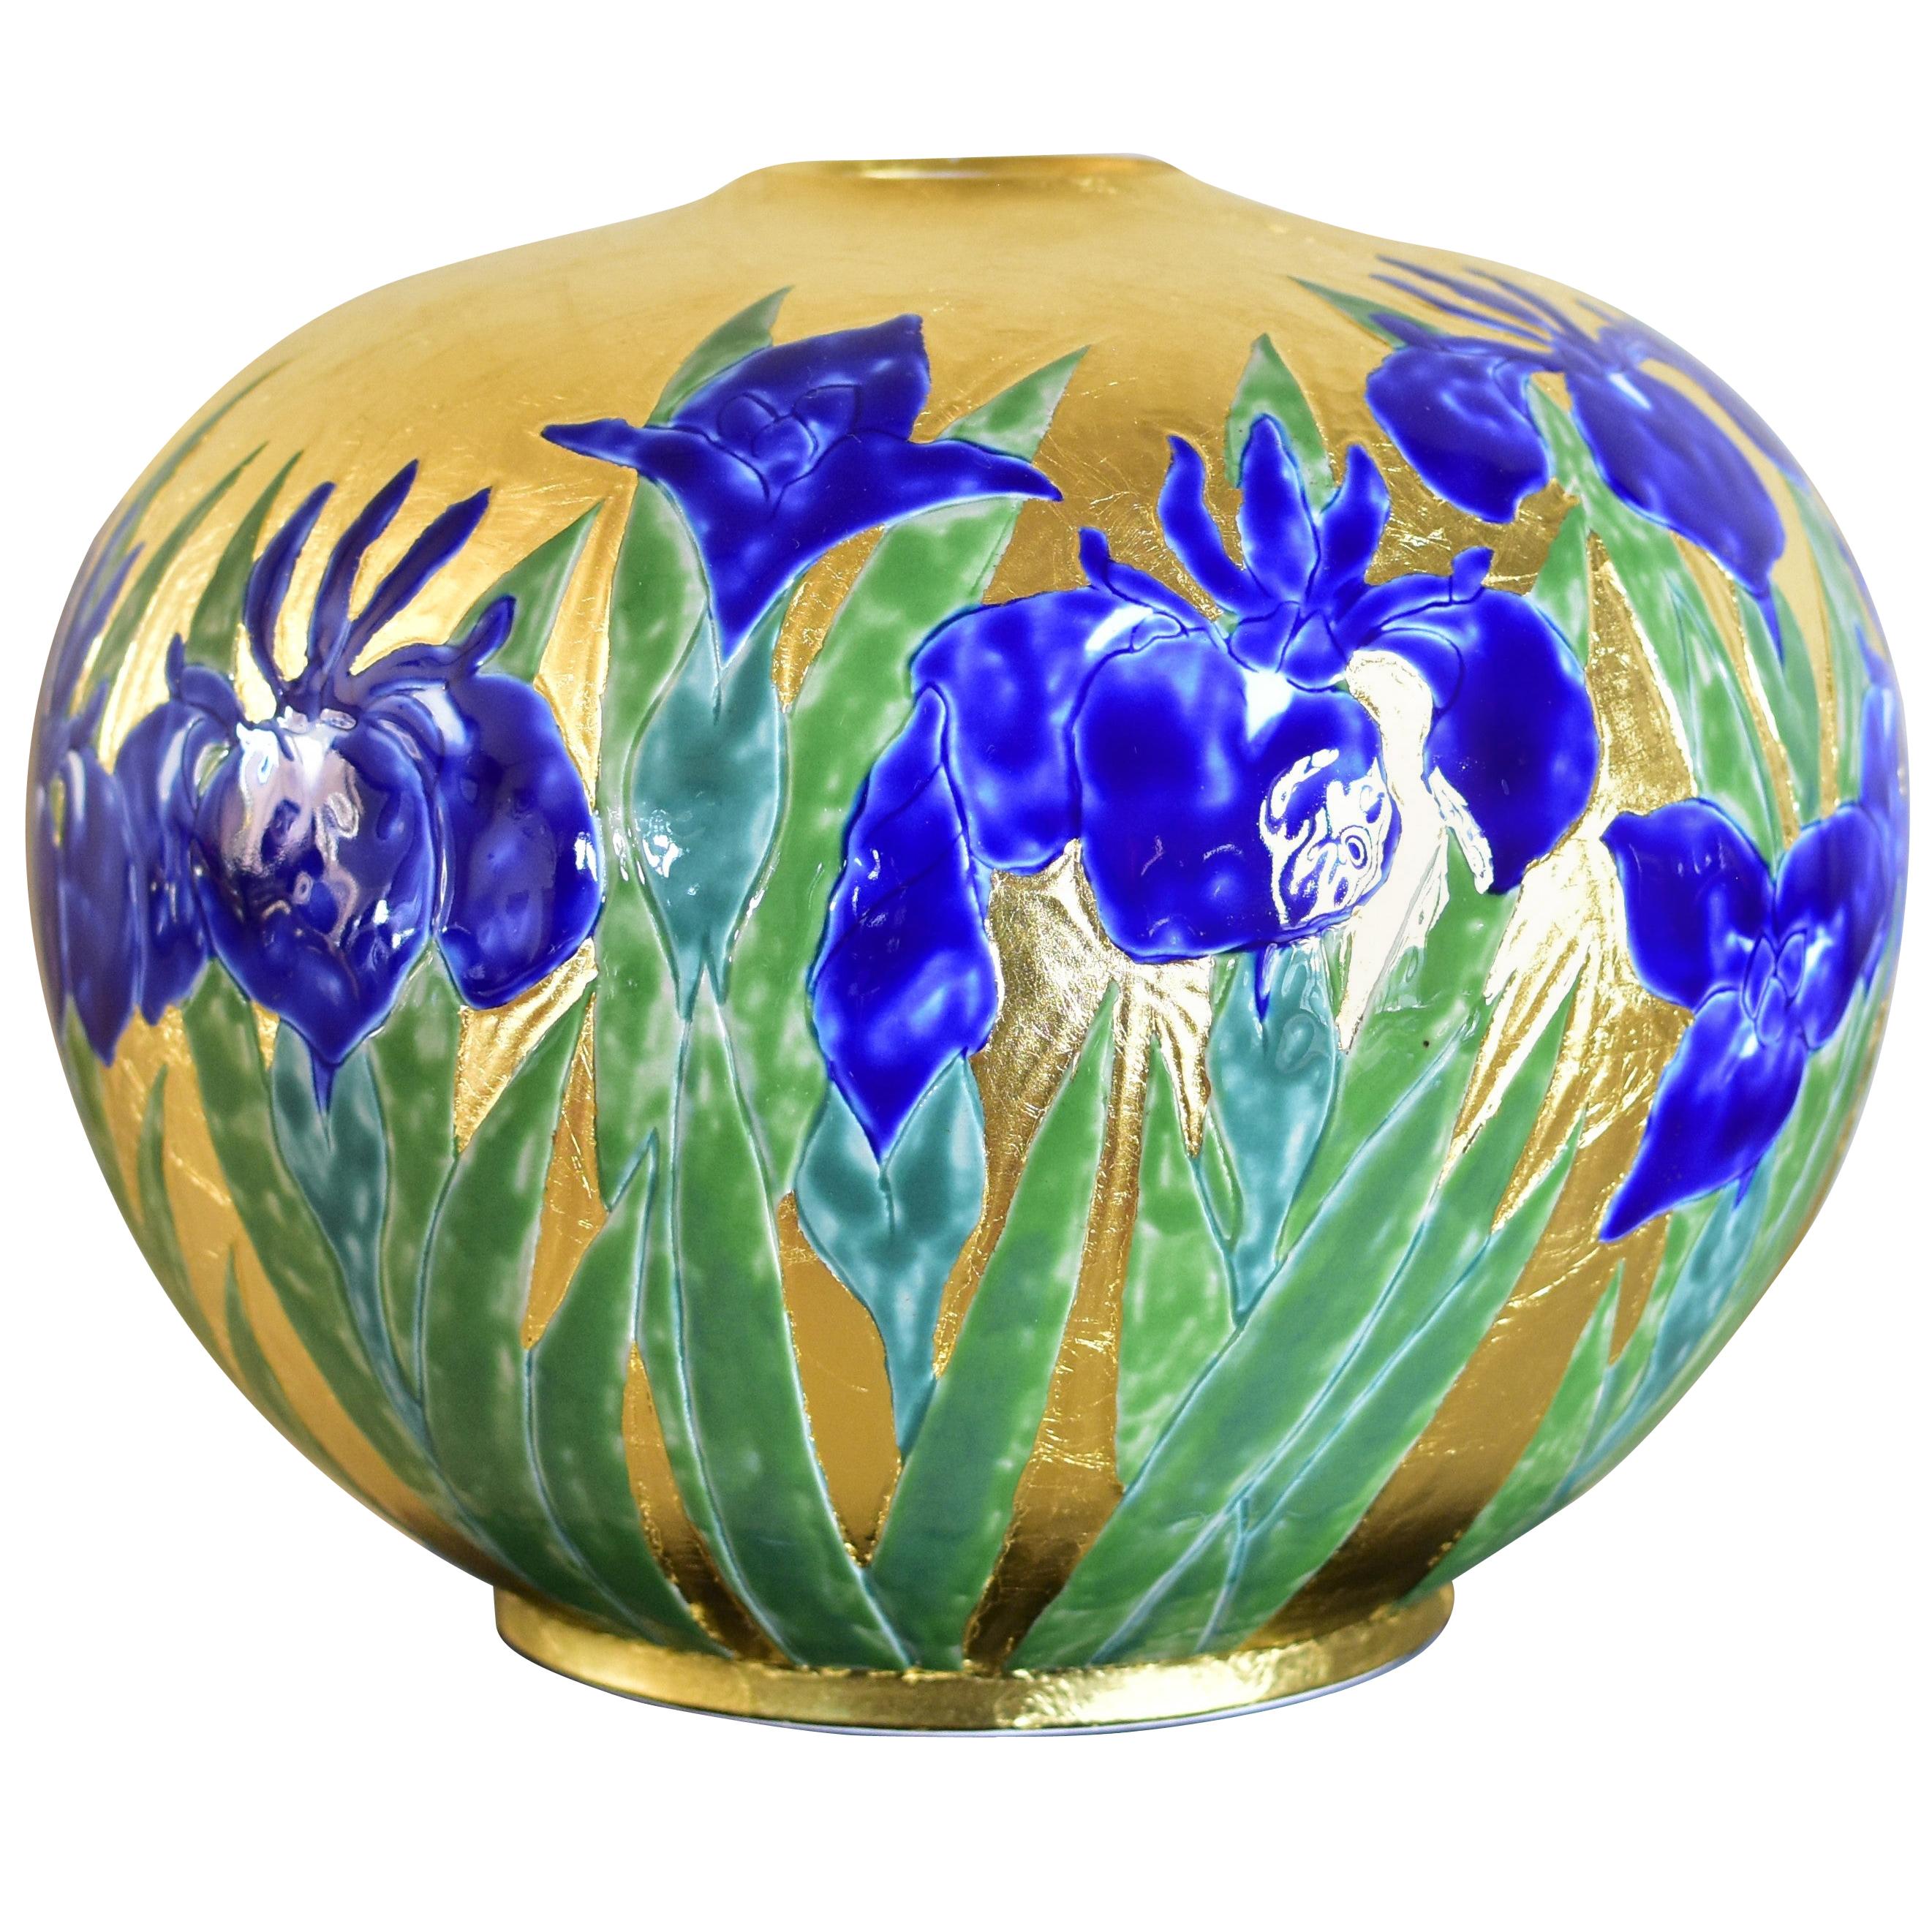 Japanese Contemporary Gold Green Blue Porcelain Vase by Master Artist, 2